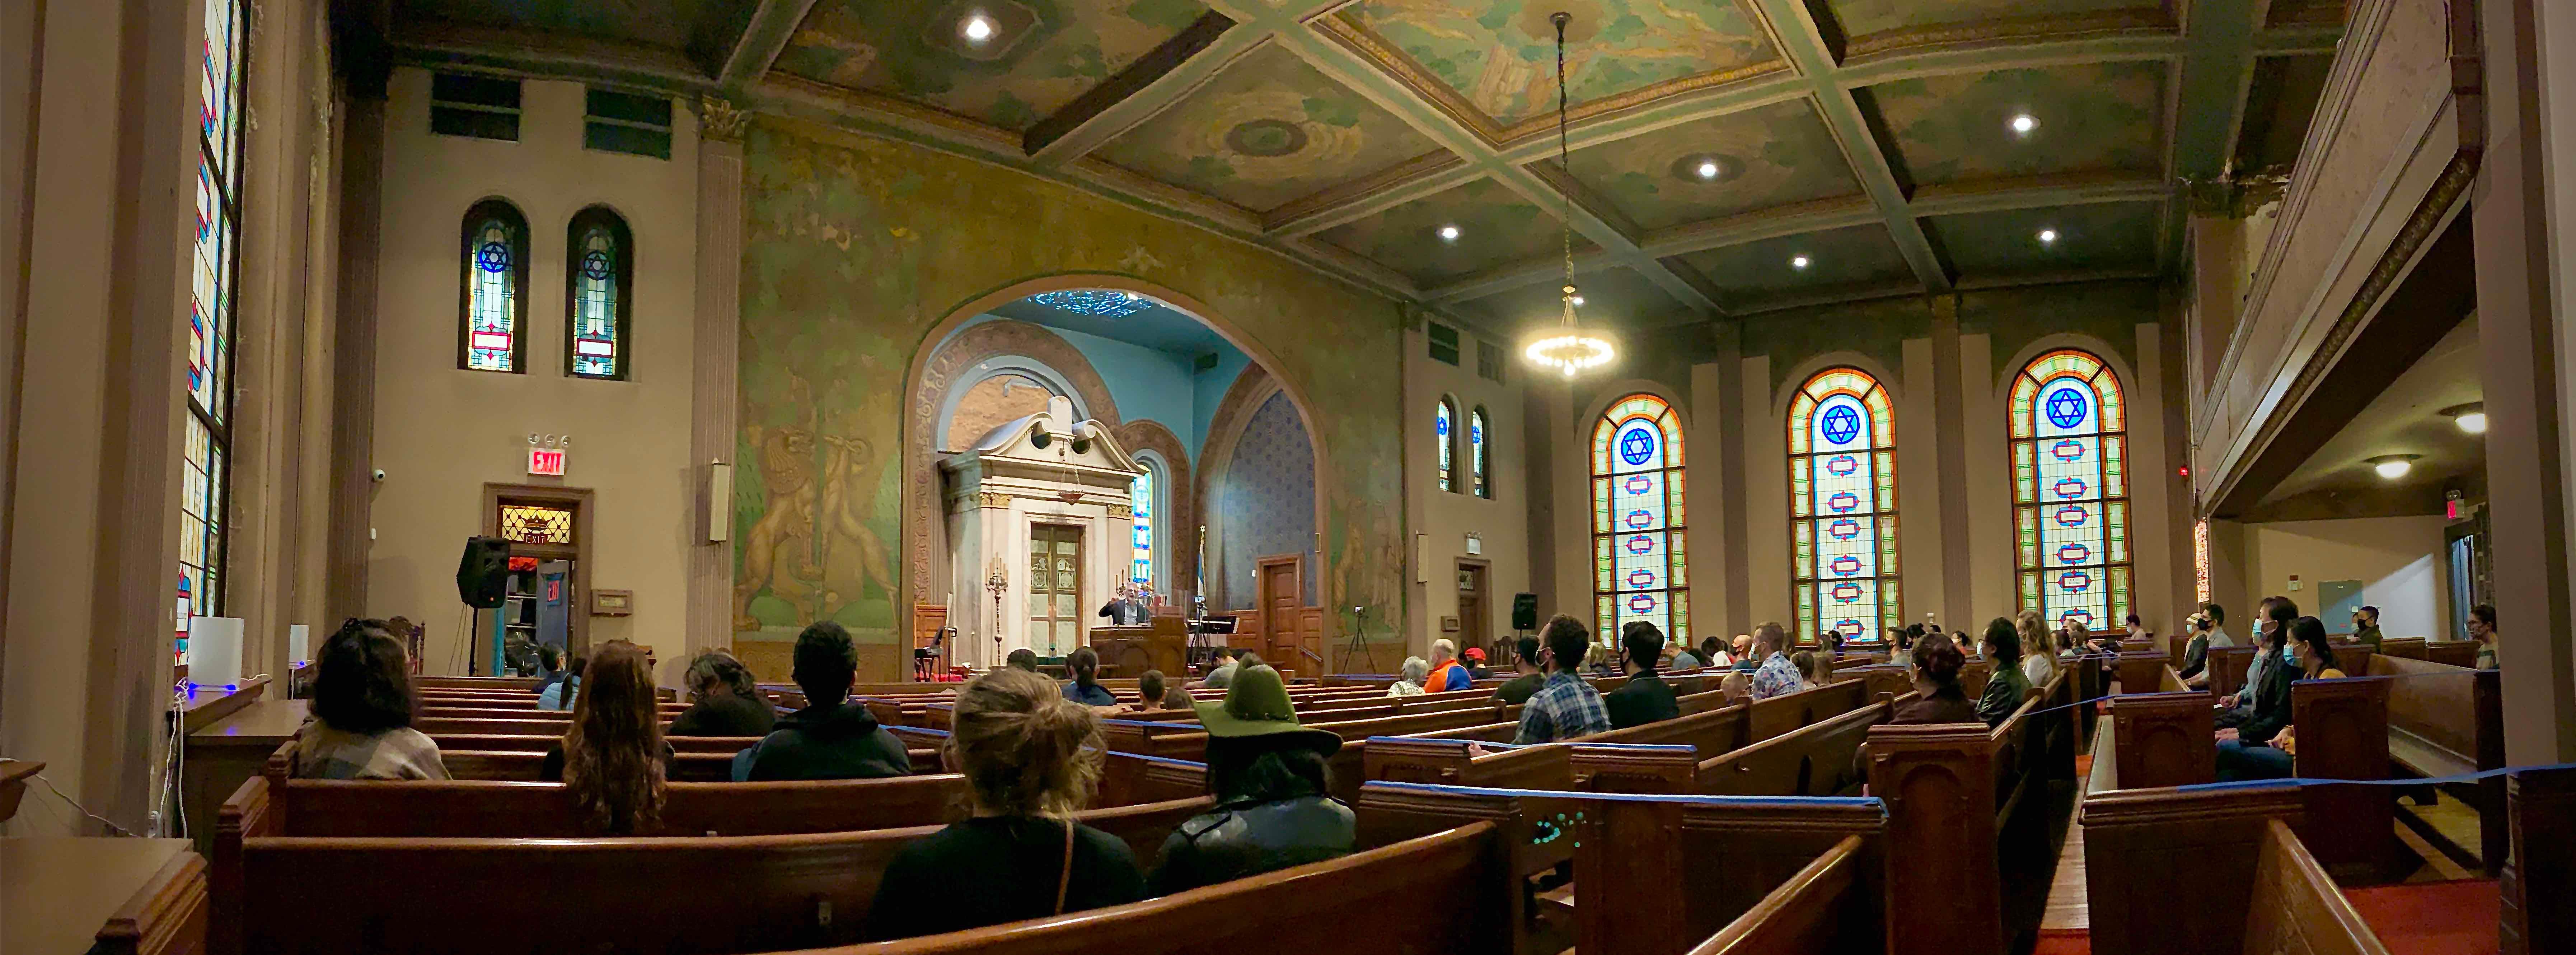 Synagogue 10-11-20 Worship